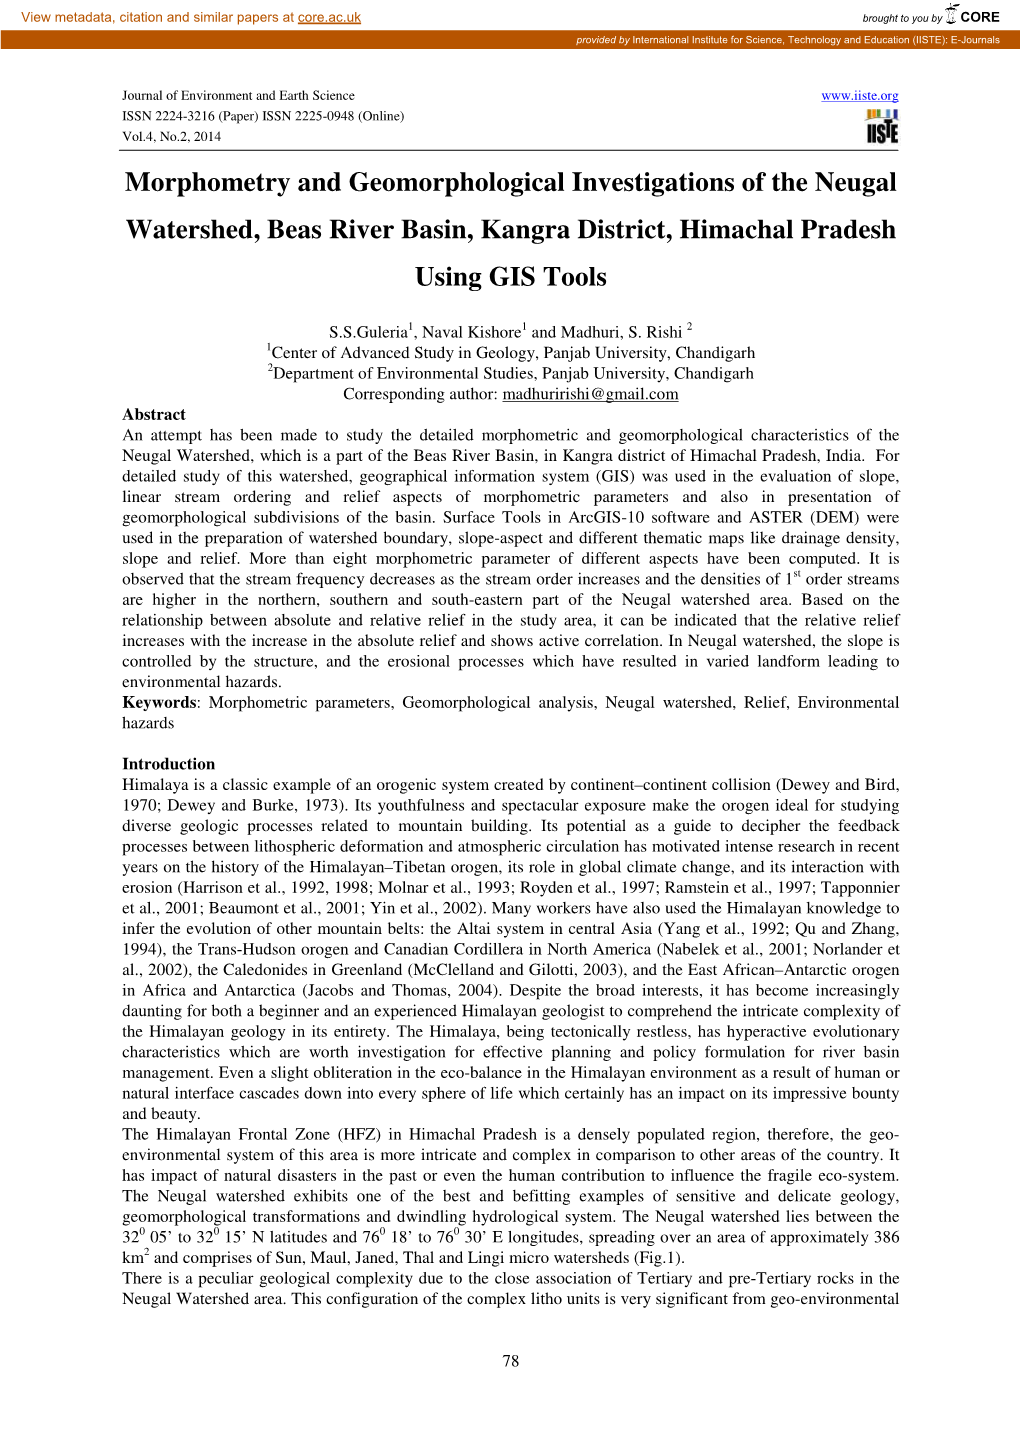 Morphometry and Geomorphological Investigations of the Neugal Watershed, Beas River Basin, Kangra District, Himachal Pradesh Using GIS Tools